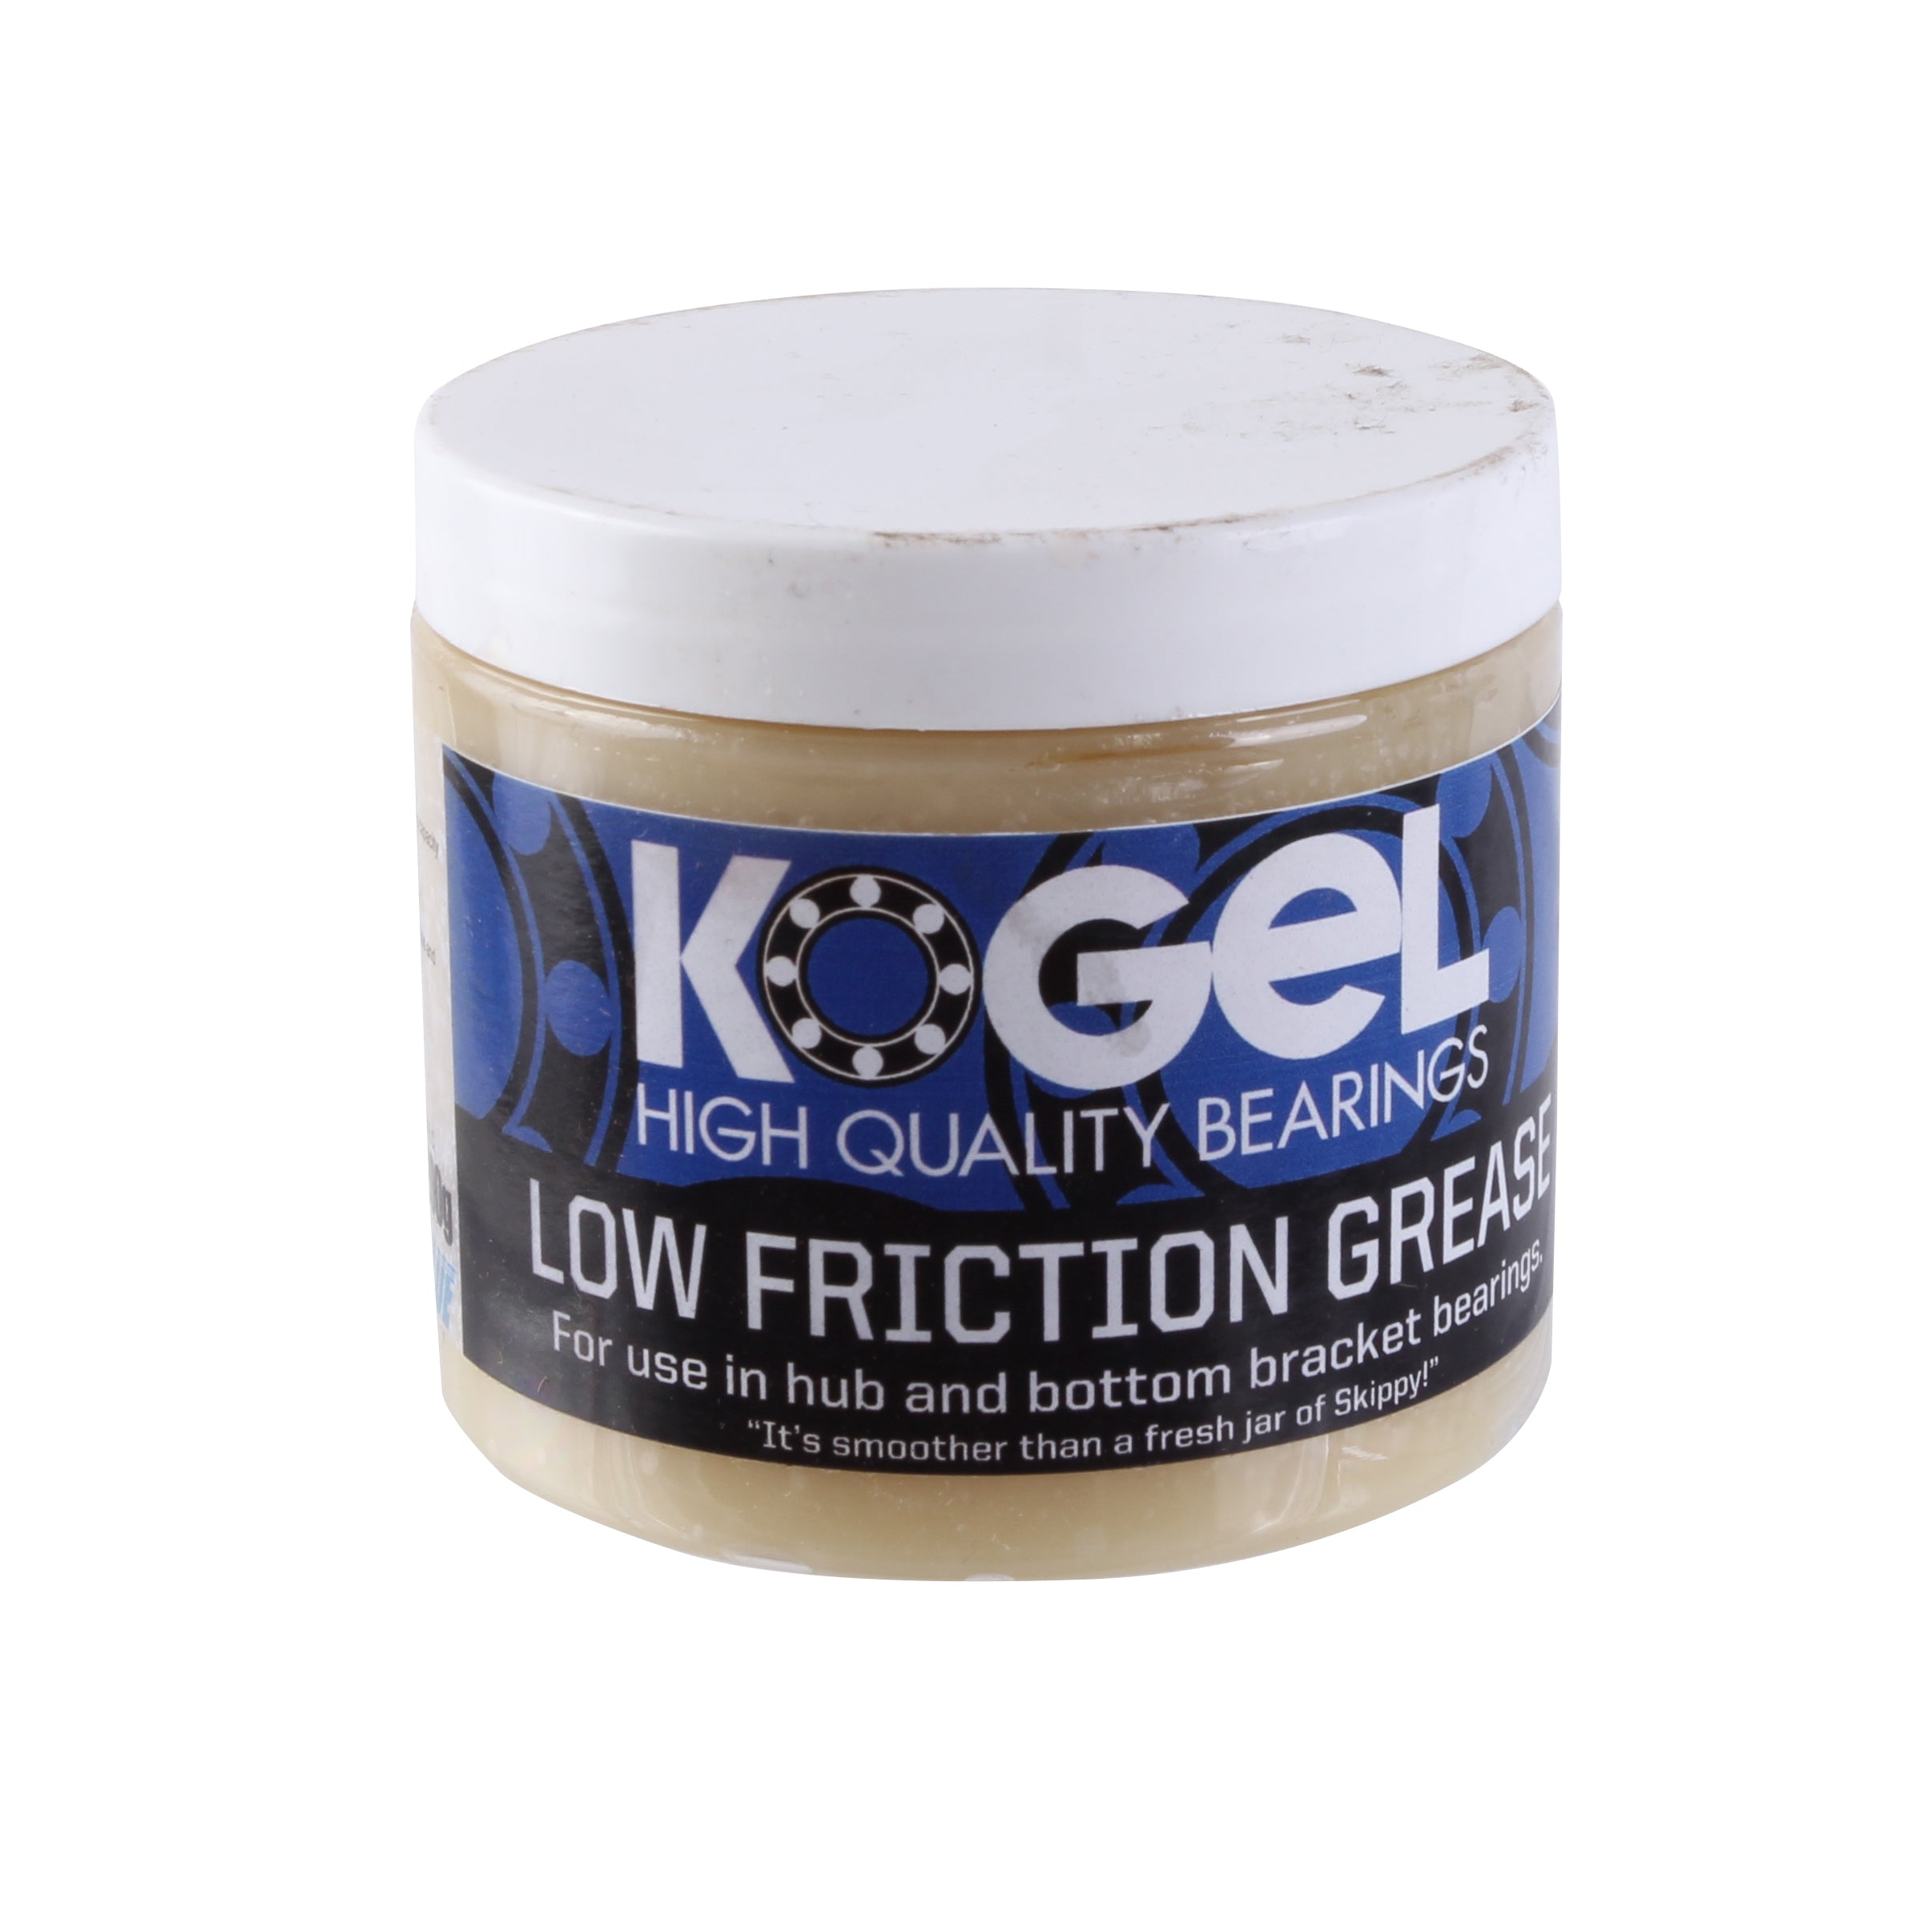 Kogel Bearings Low Friction Grease 200ml Jar